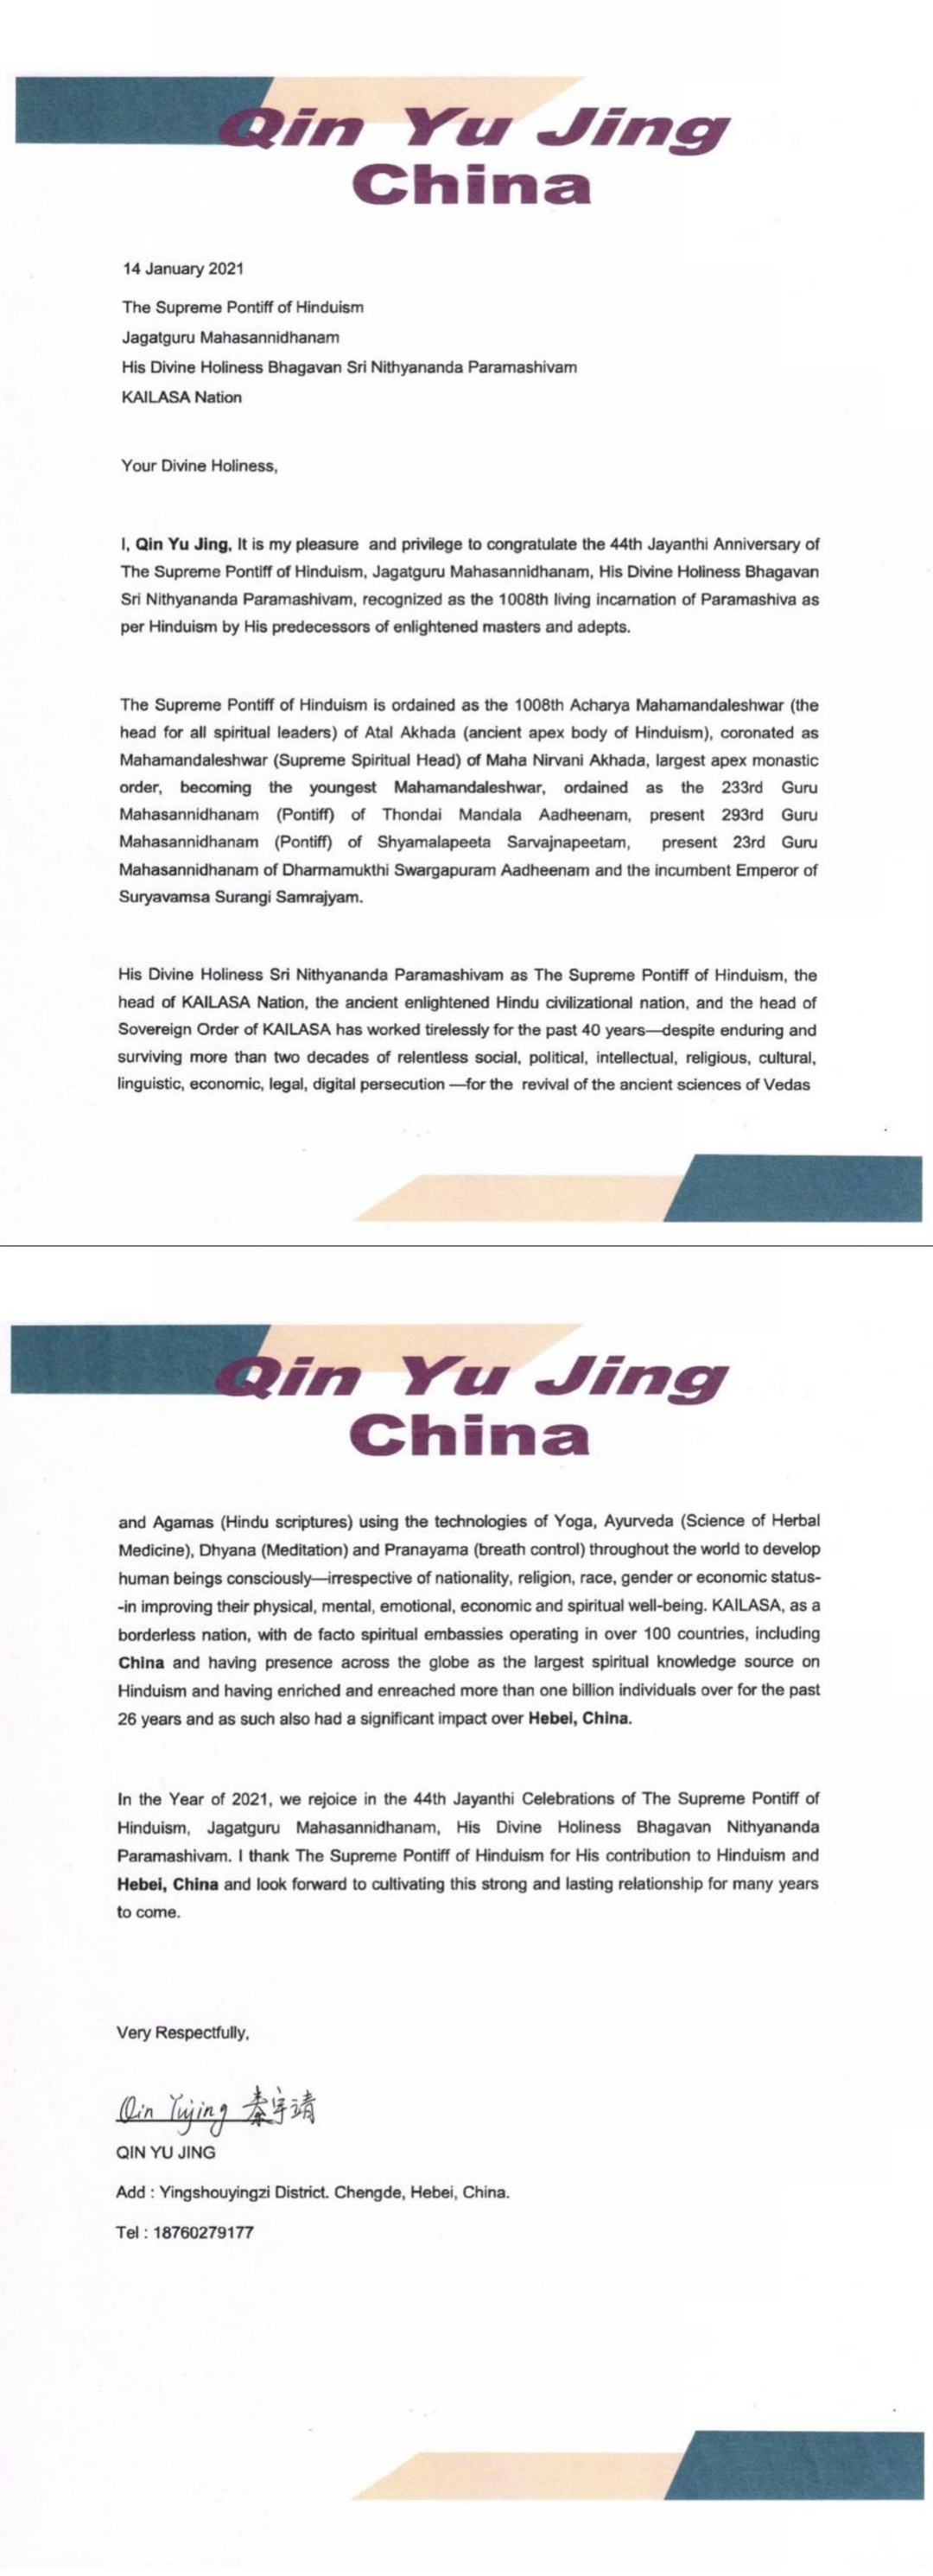 China---Yu-Jing-Qin---January-14--2021-(Proclamation)-1Kv7Hq7ukPXOj0QeyqkOPCQawqxPAvav1.pdf